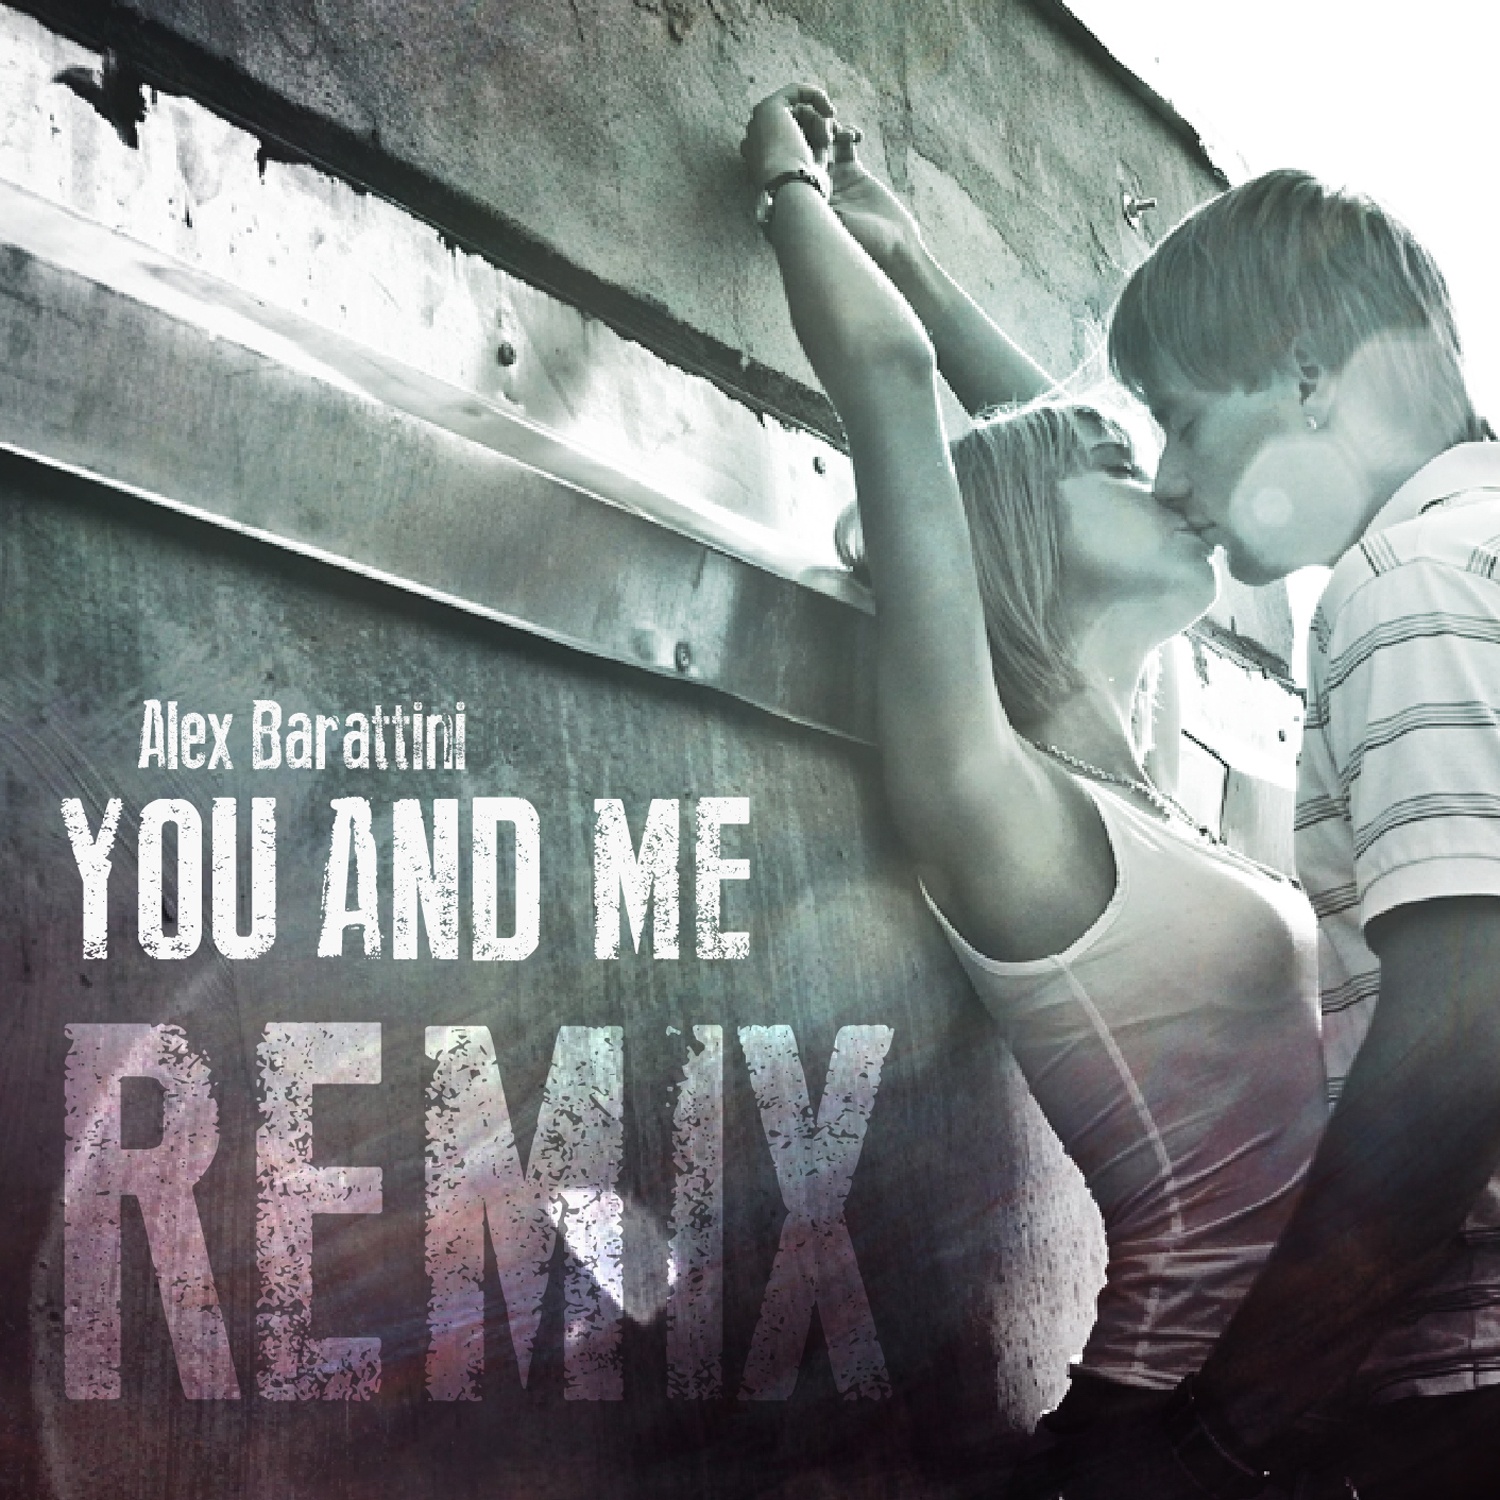 You And Me (Remixes)